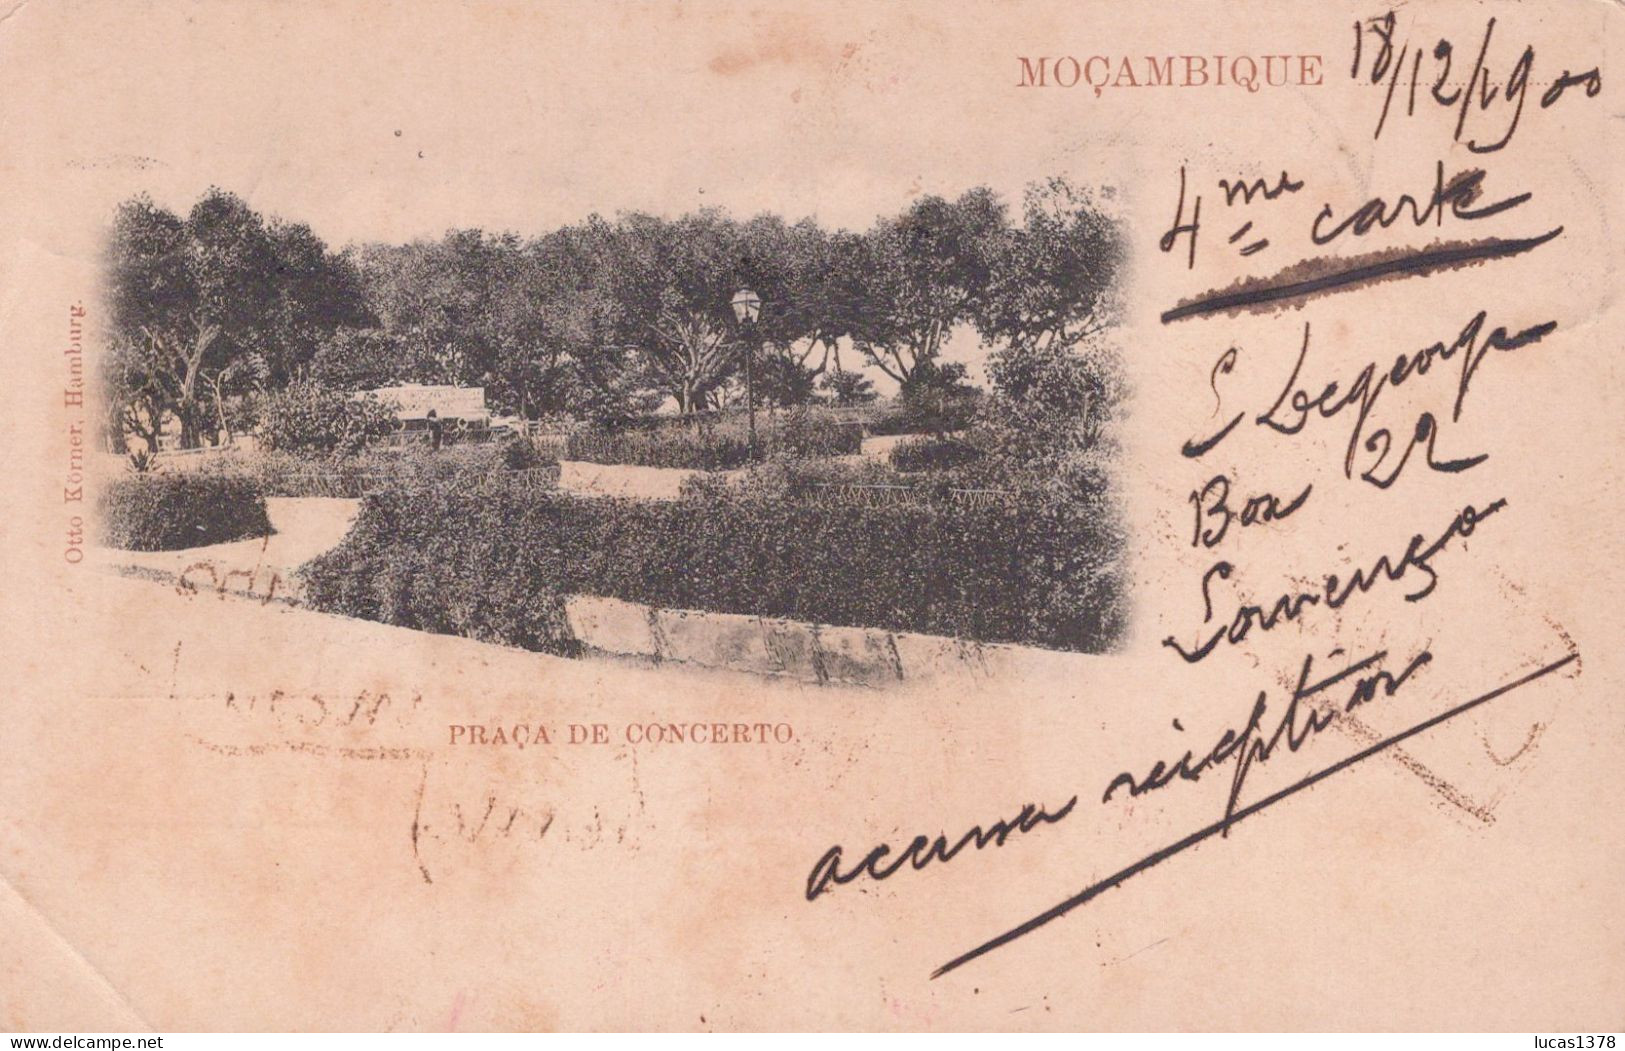 MOCAMBIQUE / MOZAMBIQUE / PRACA DE CONCERTO / DOS NON DIVISE 1903 / BEL AFFRANCHISSEMENT / RARE ++ - Mozambico